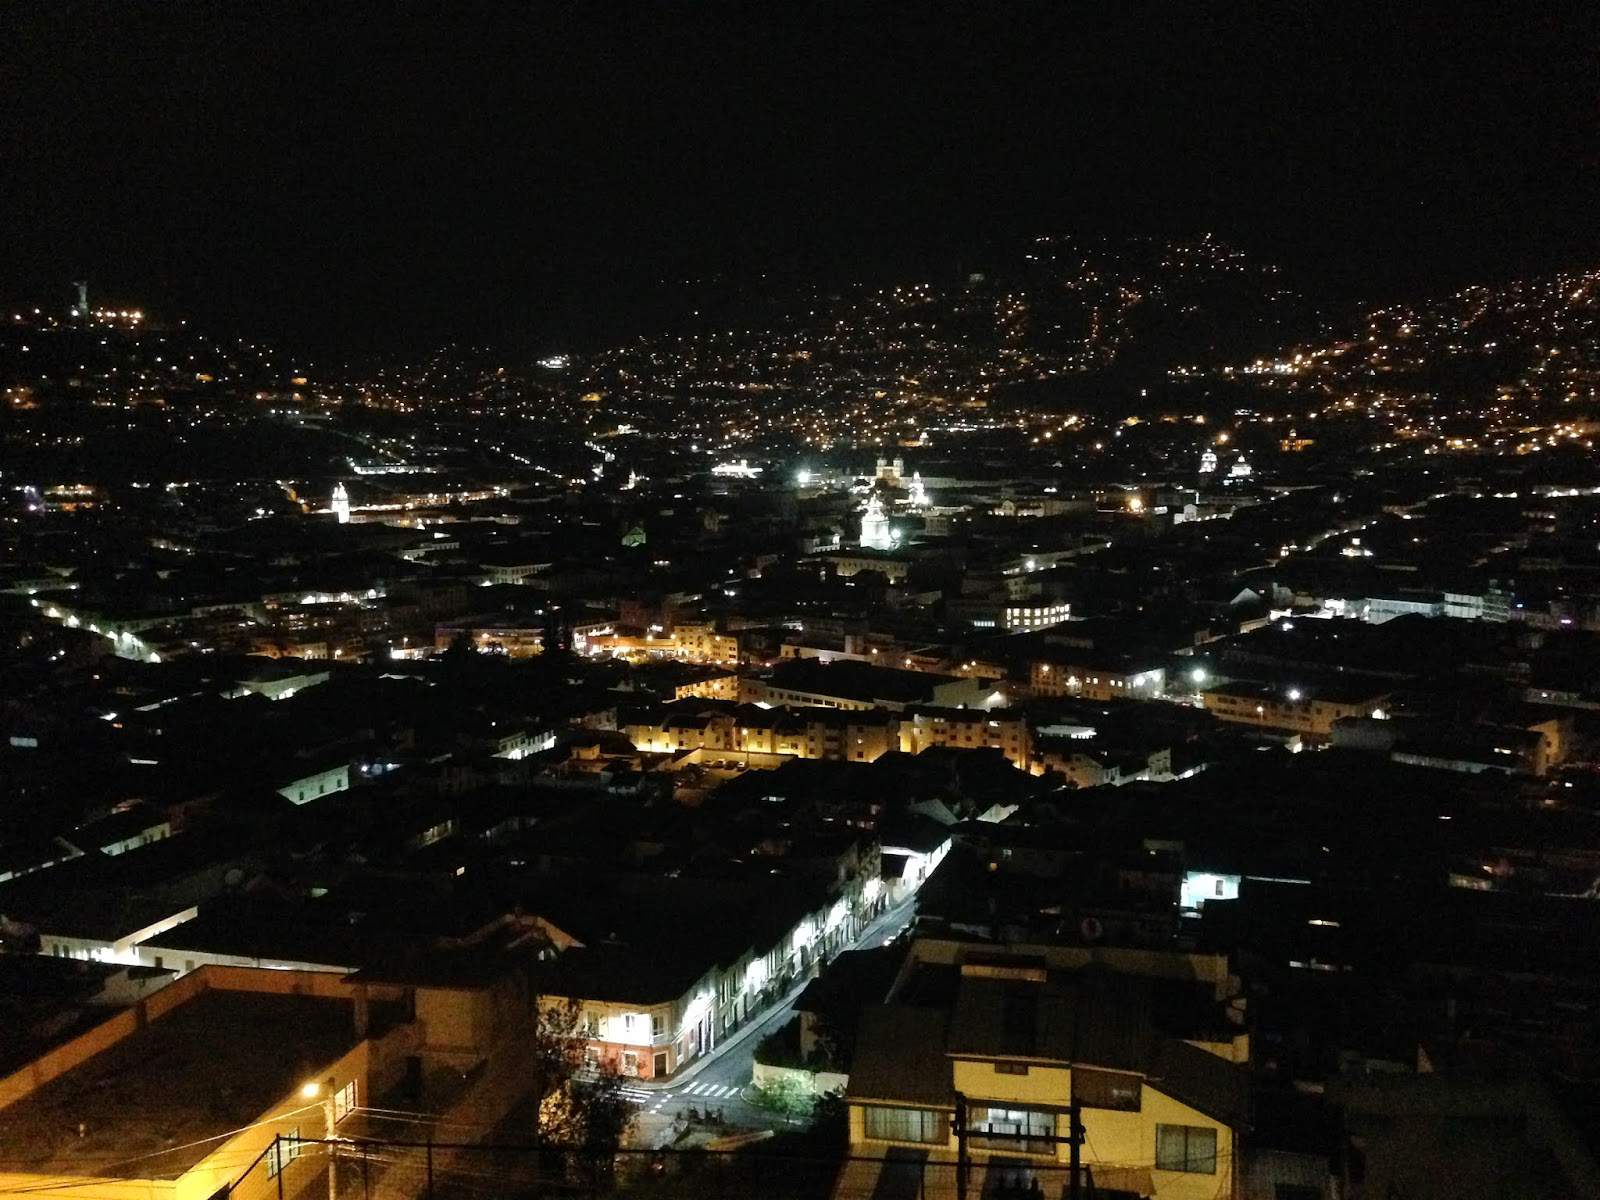 View from Café Mosaico at Parque Itchimbia in Quito, Ecuador